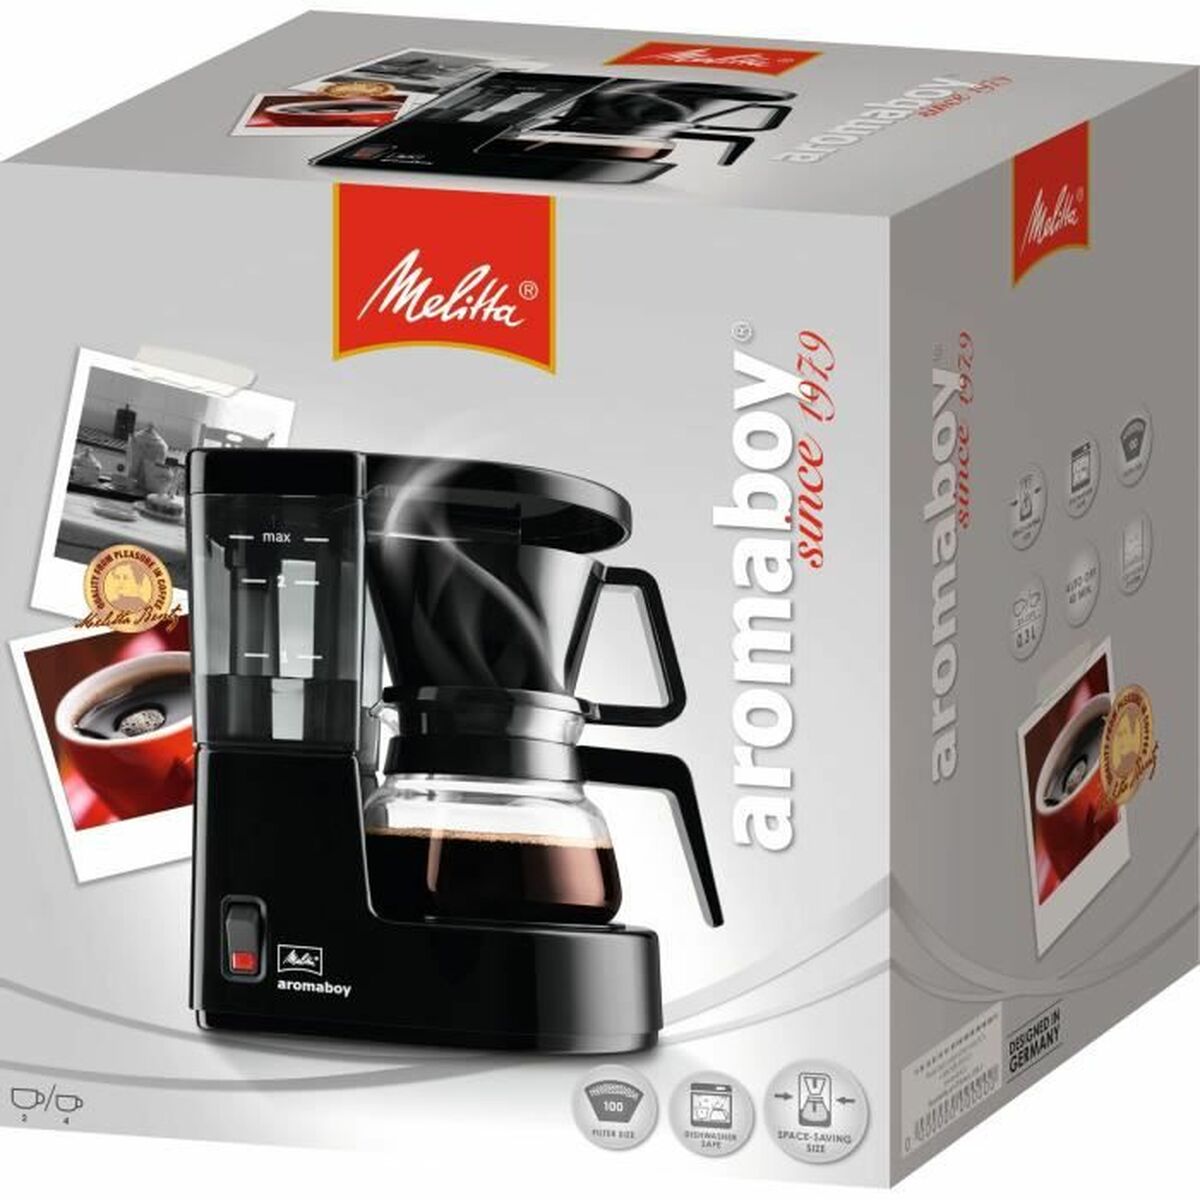 Drip Koffiemachine Melitta Aromaboy 500 W Zwart 500 W